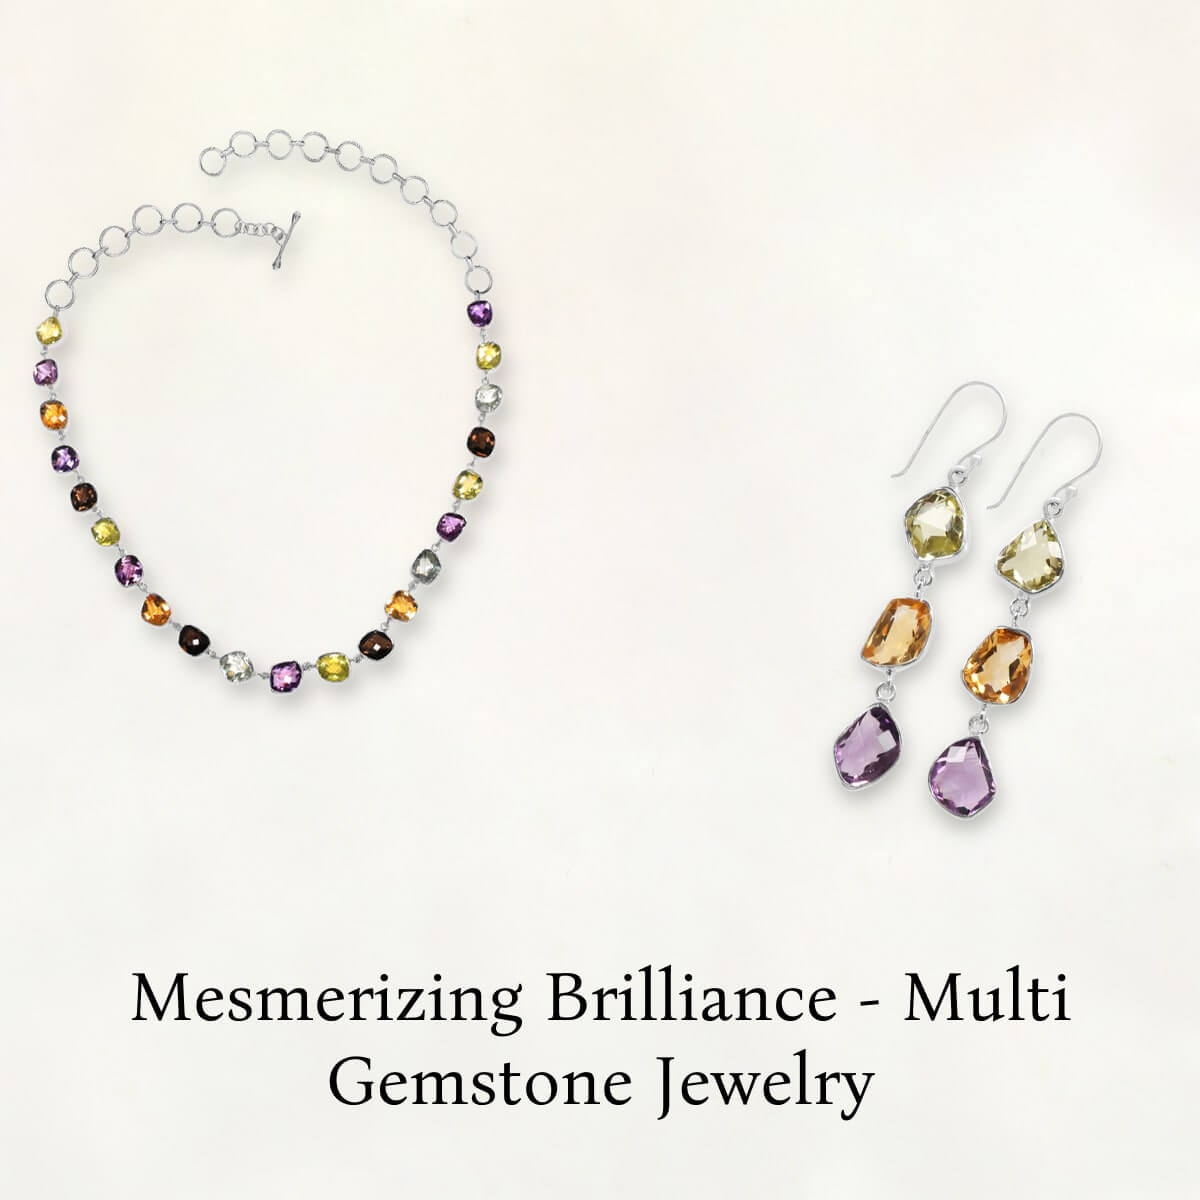 Multi Gemstone Jewelry